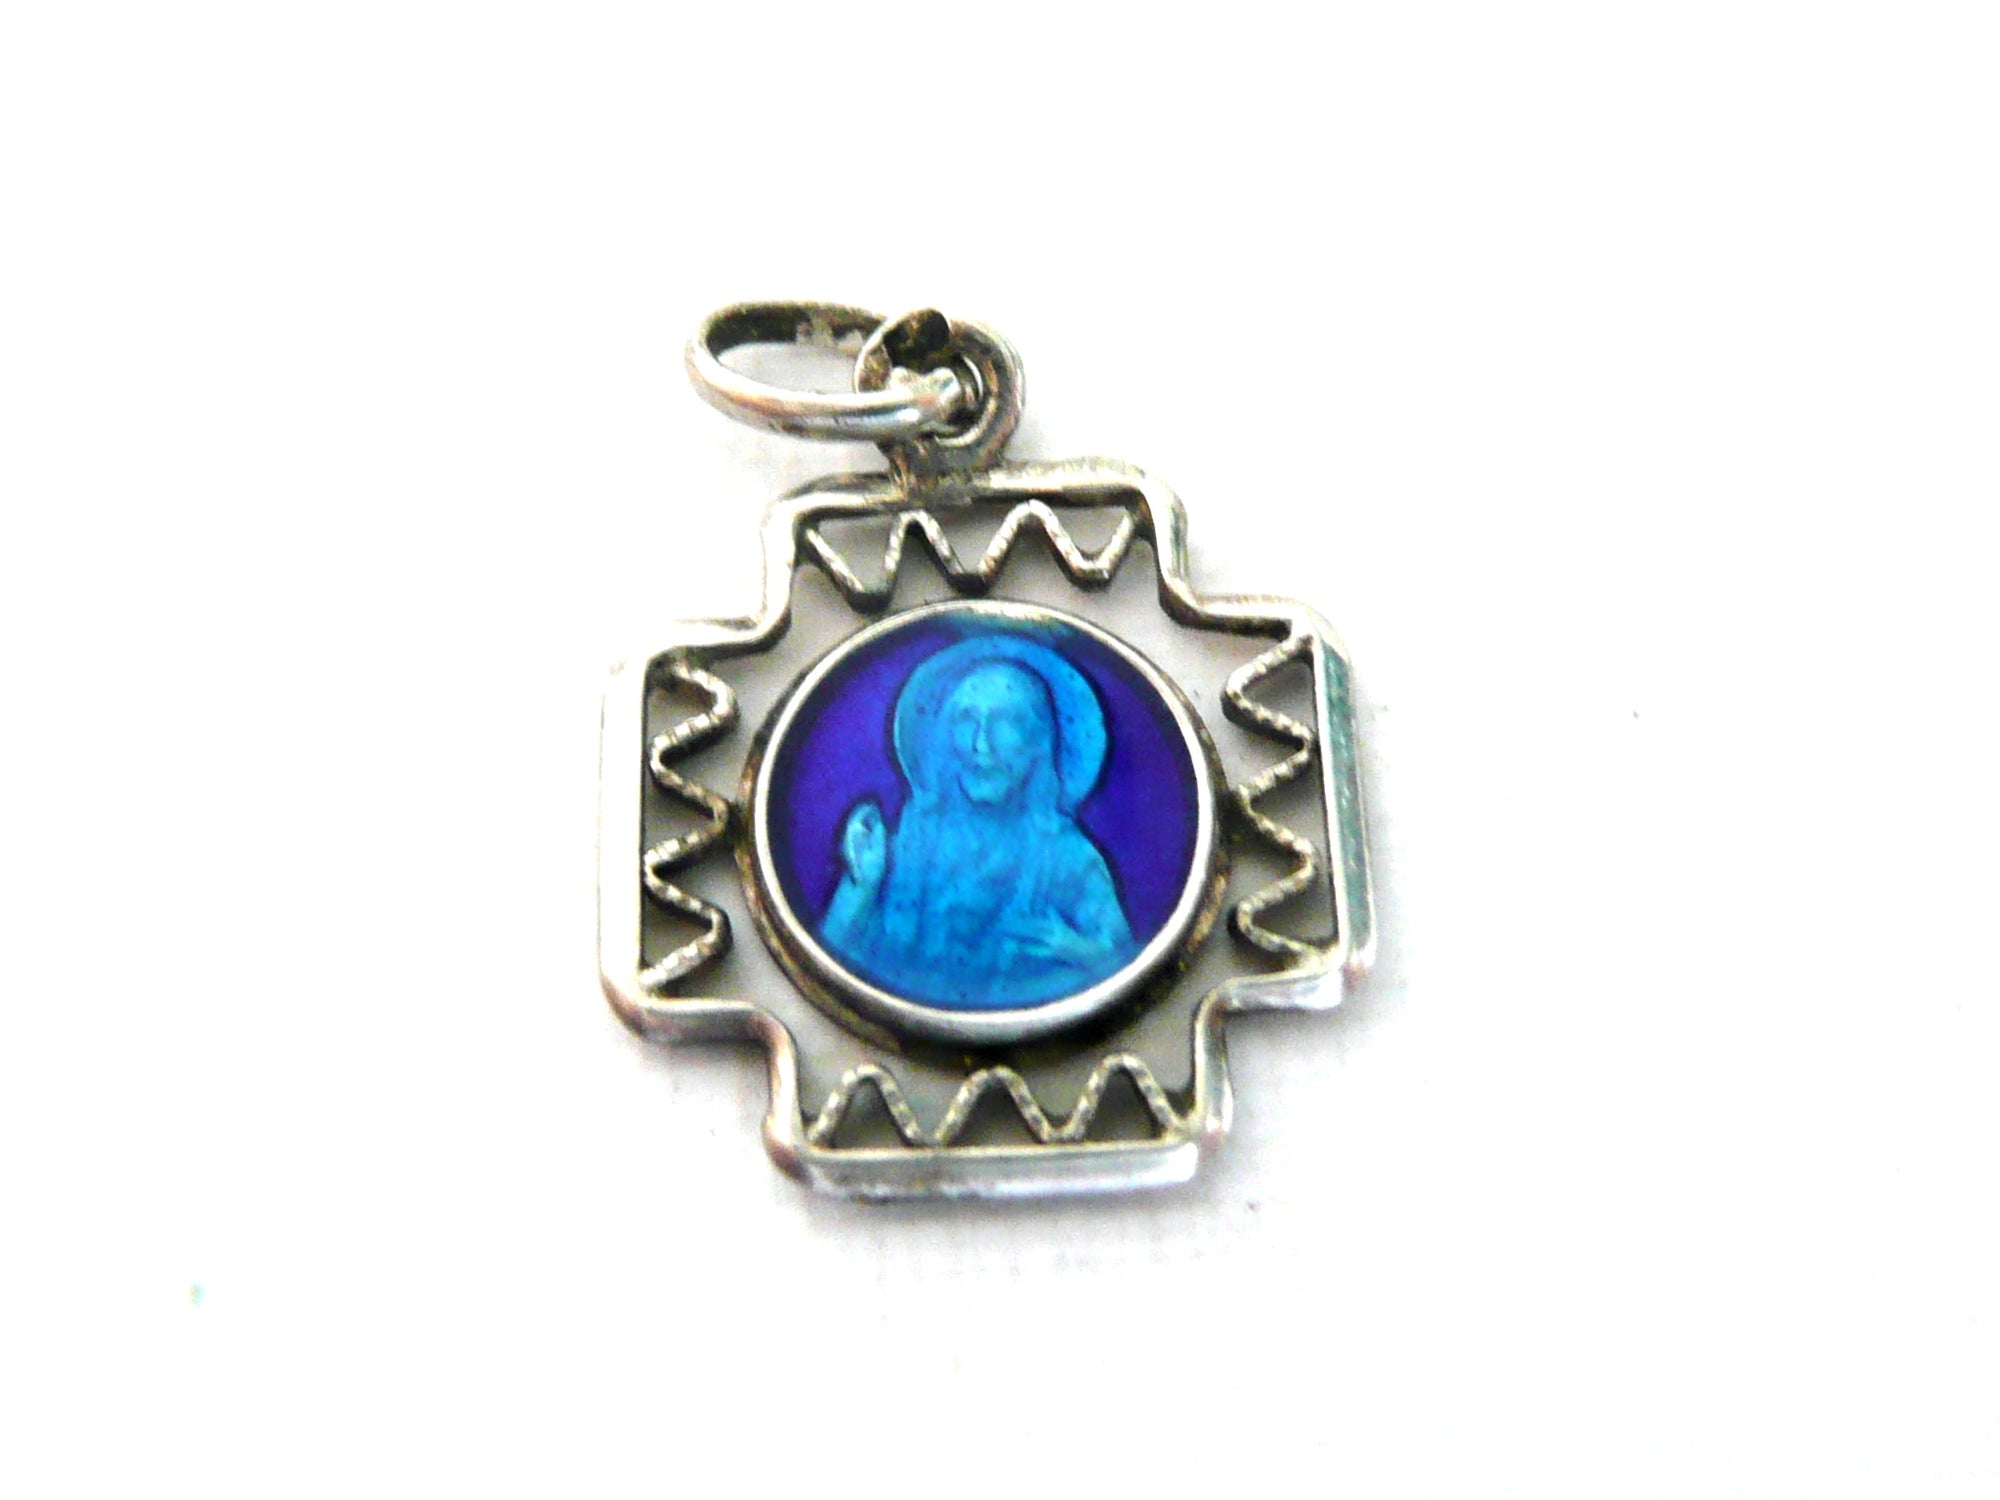 Vintage French Silver and Blue Enamel Sacred Heart Medal